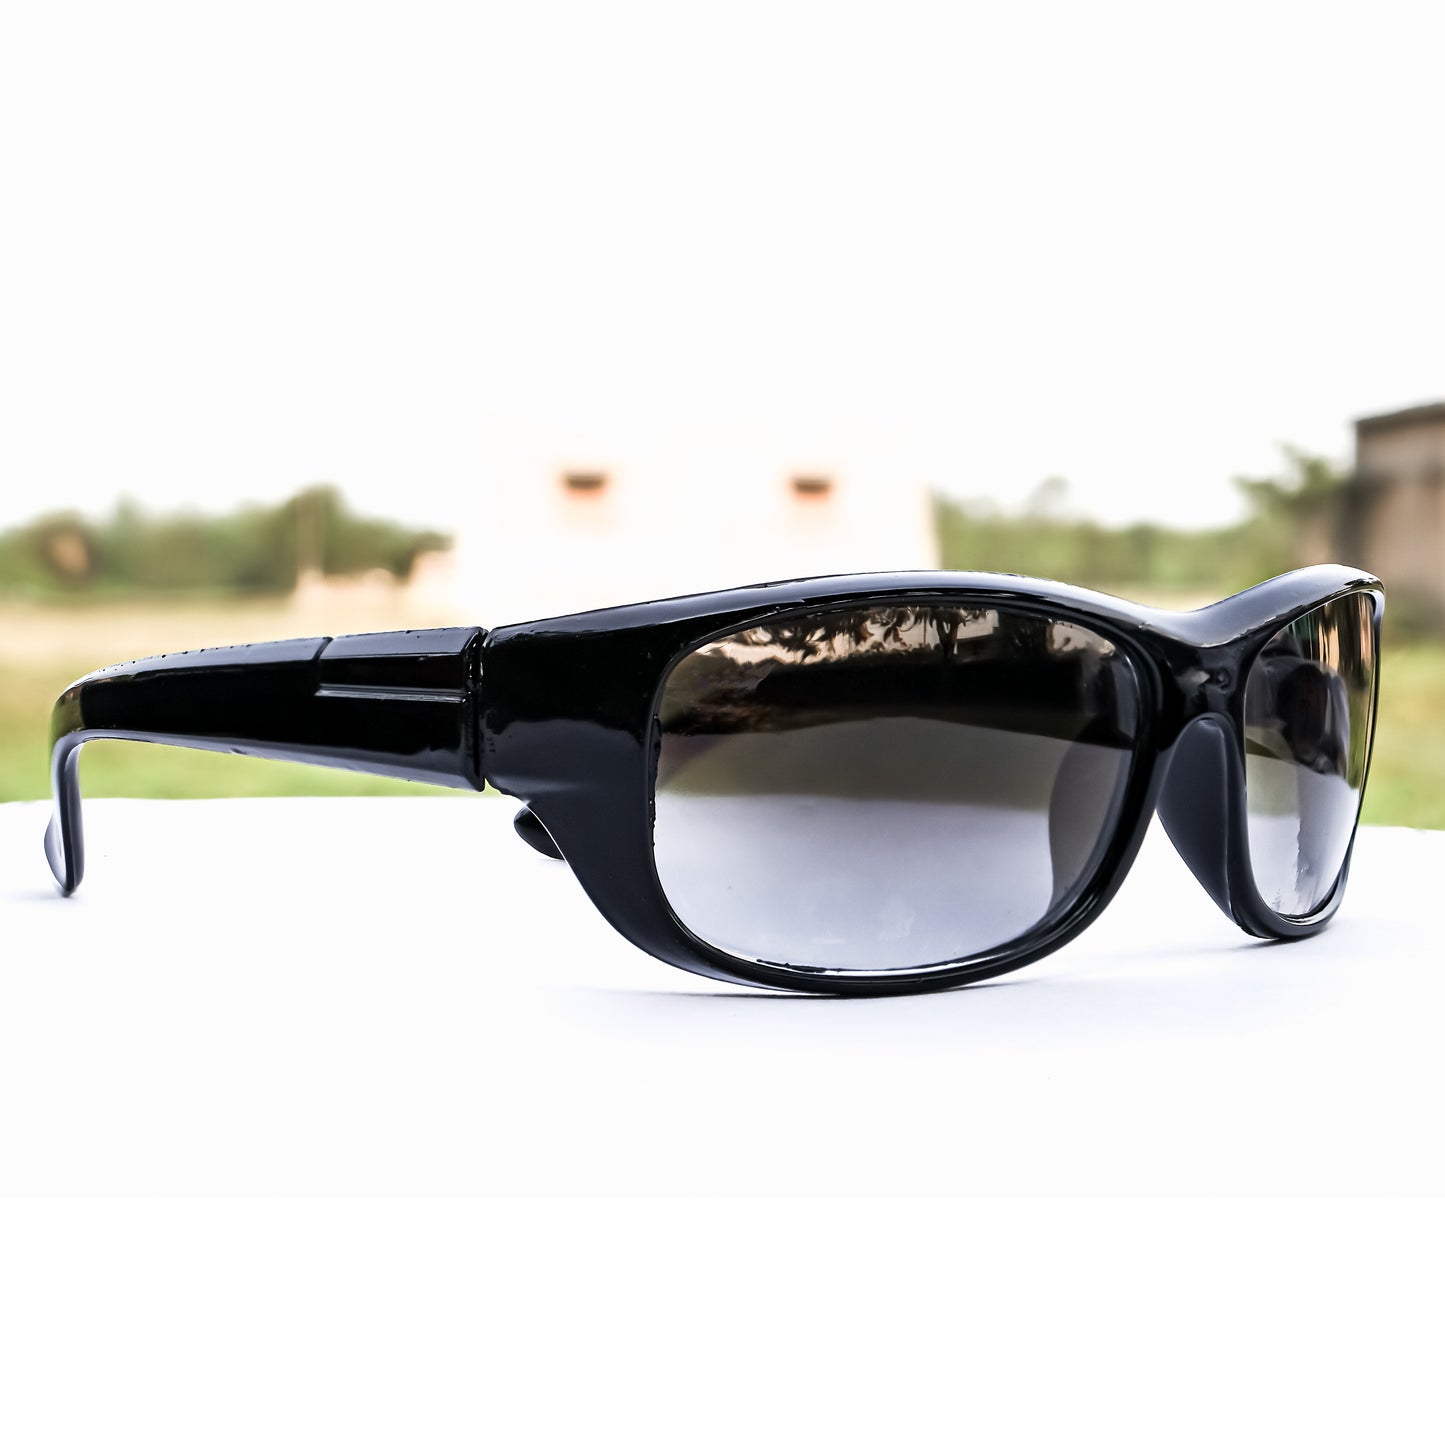 Jiebo 400% UV Protection Sports Sunglasses